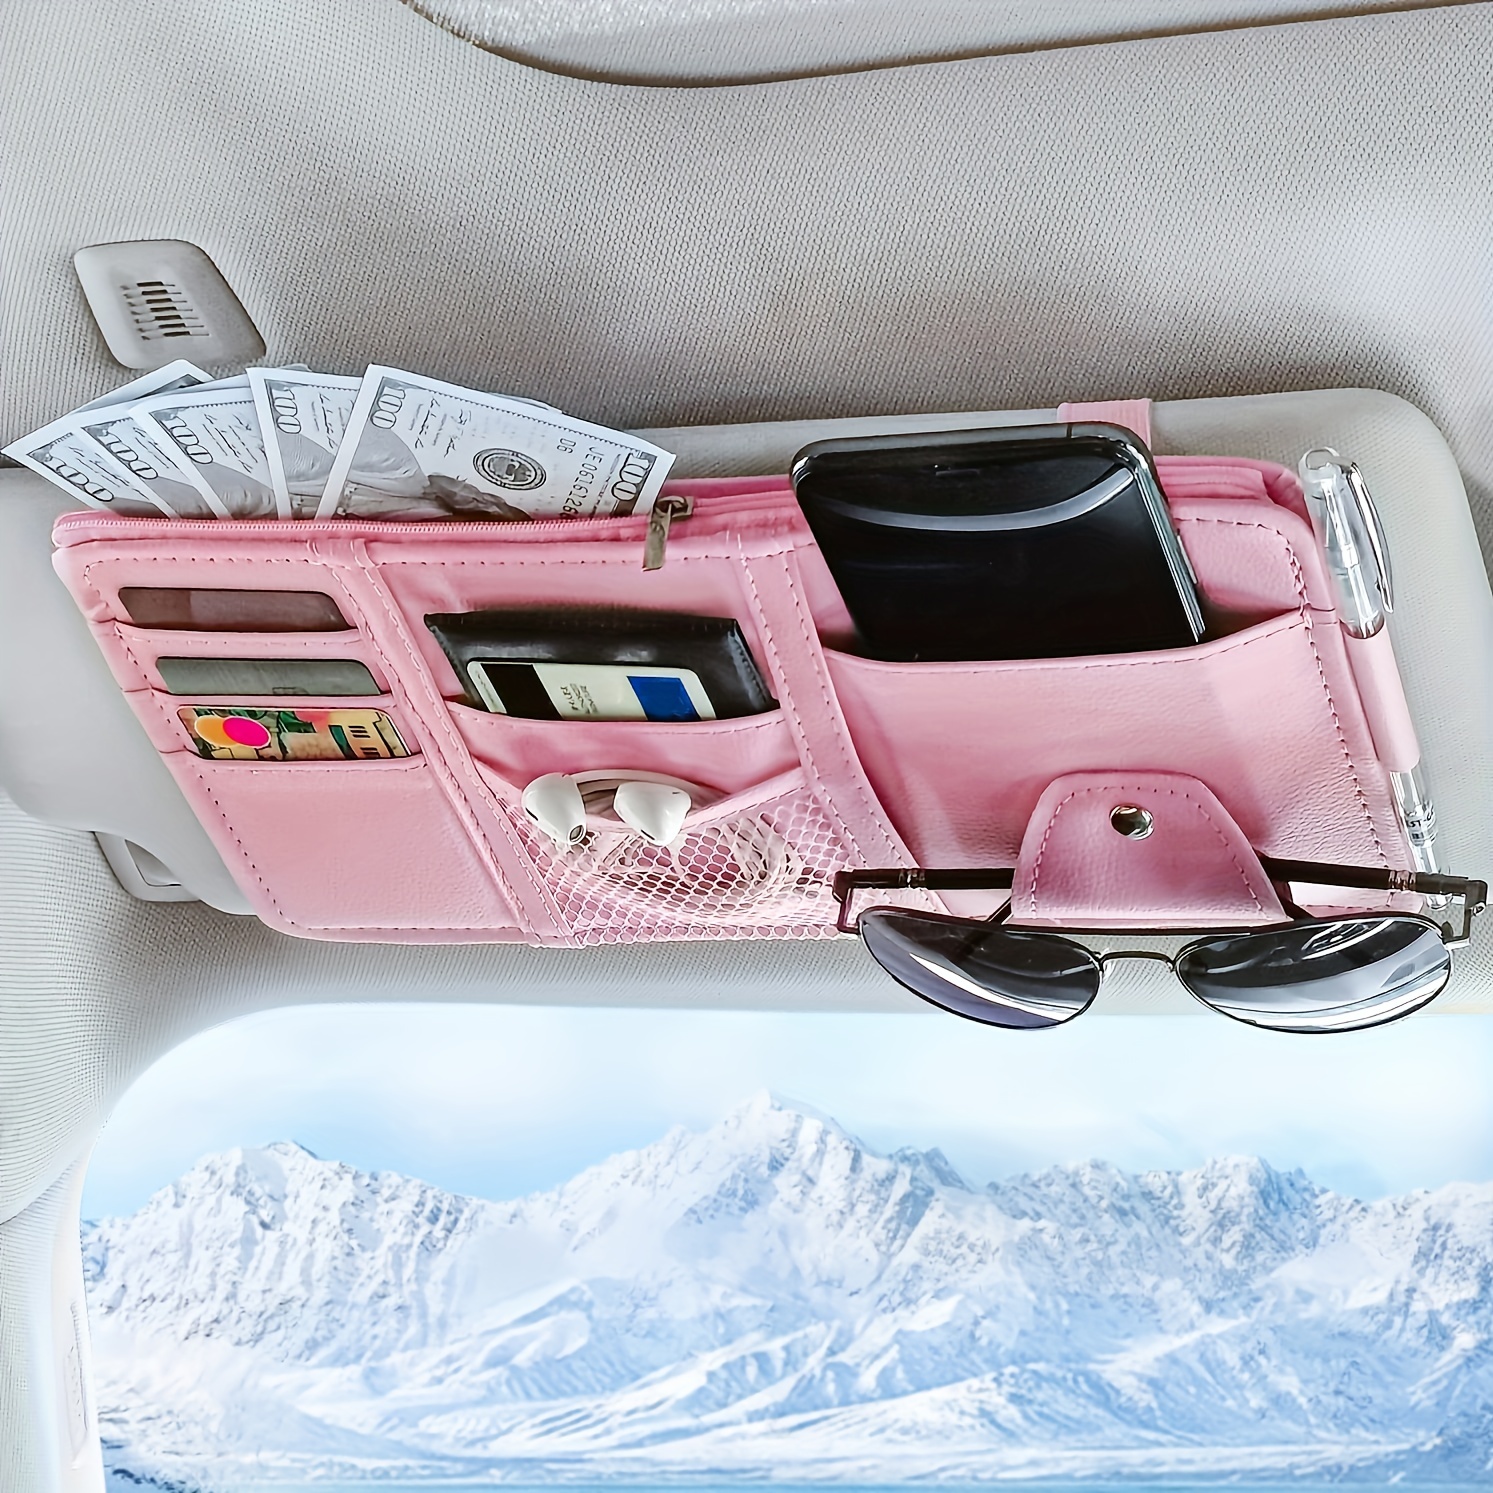 1pc Car AC Air-conditioning Vent Grille Clip Car Accessories for Hyundai  Elantra